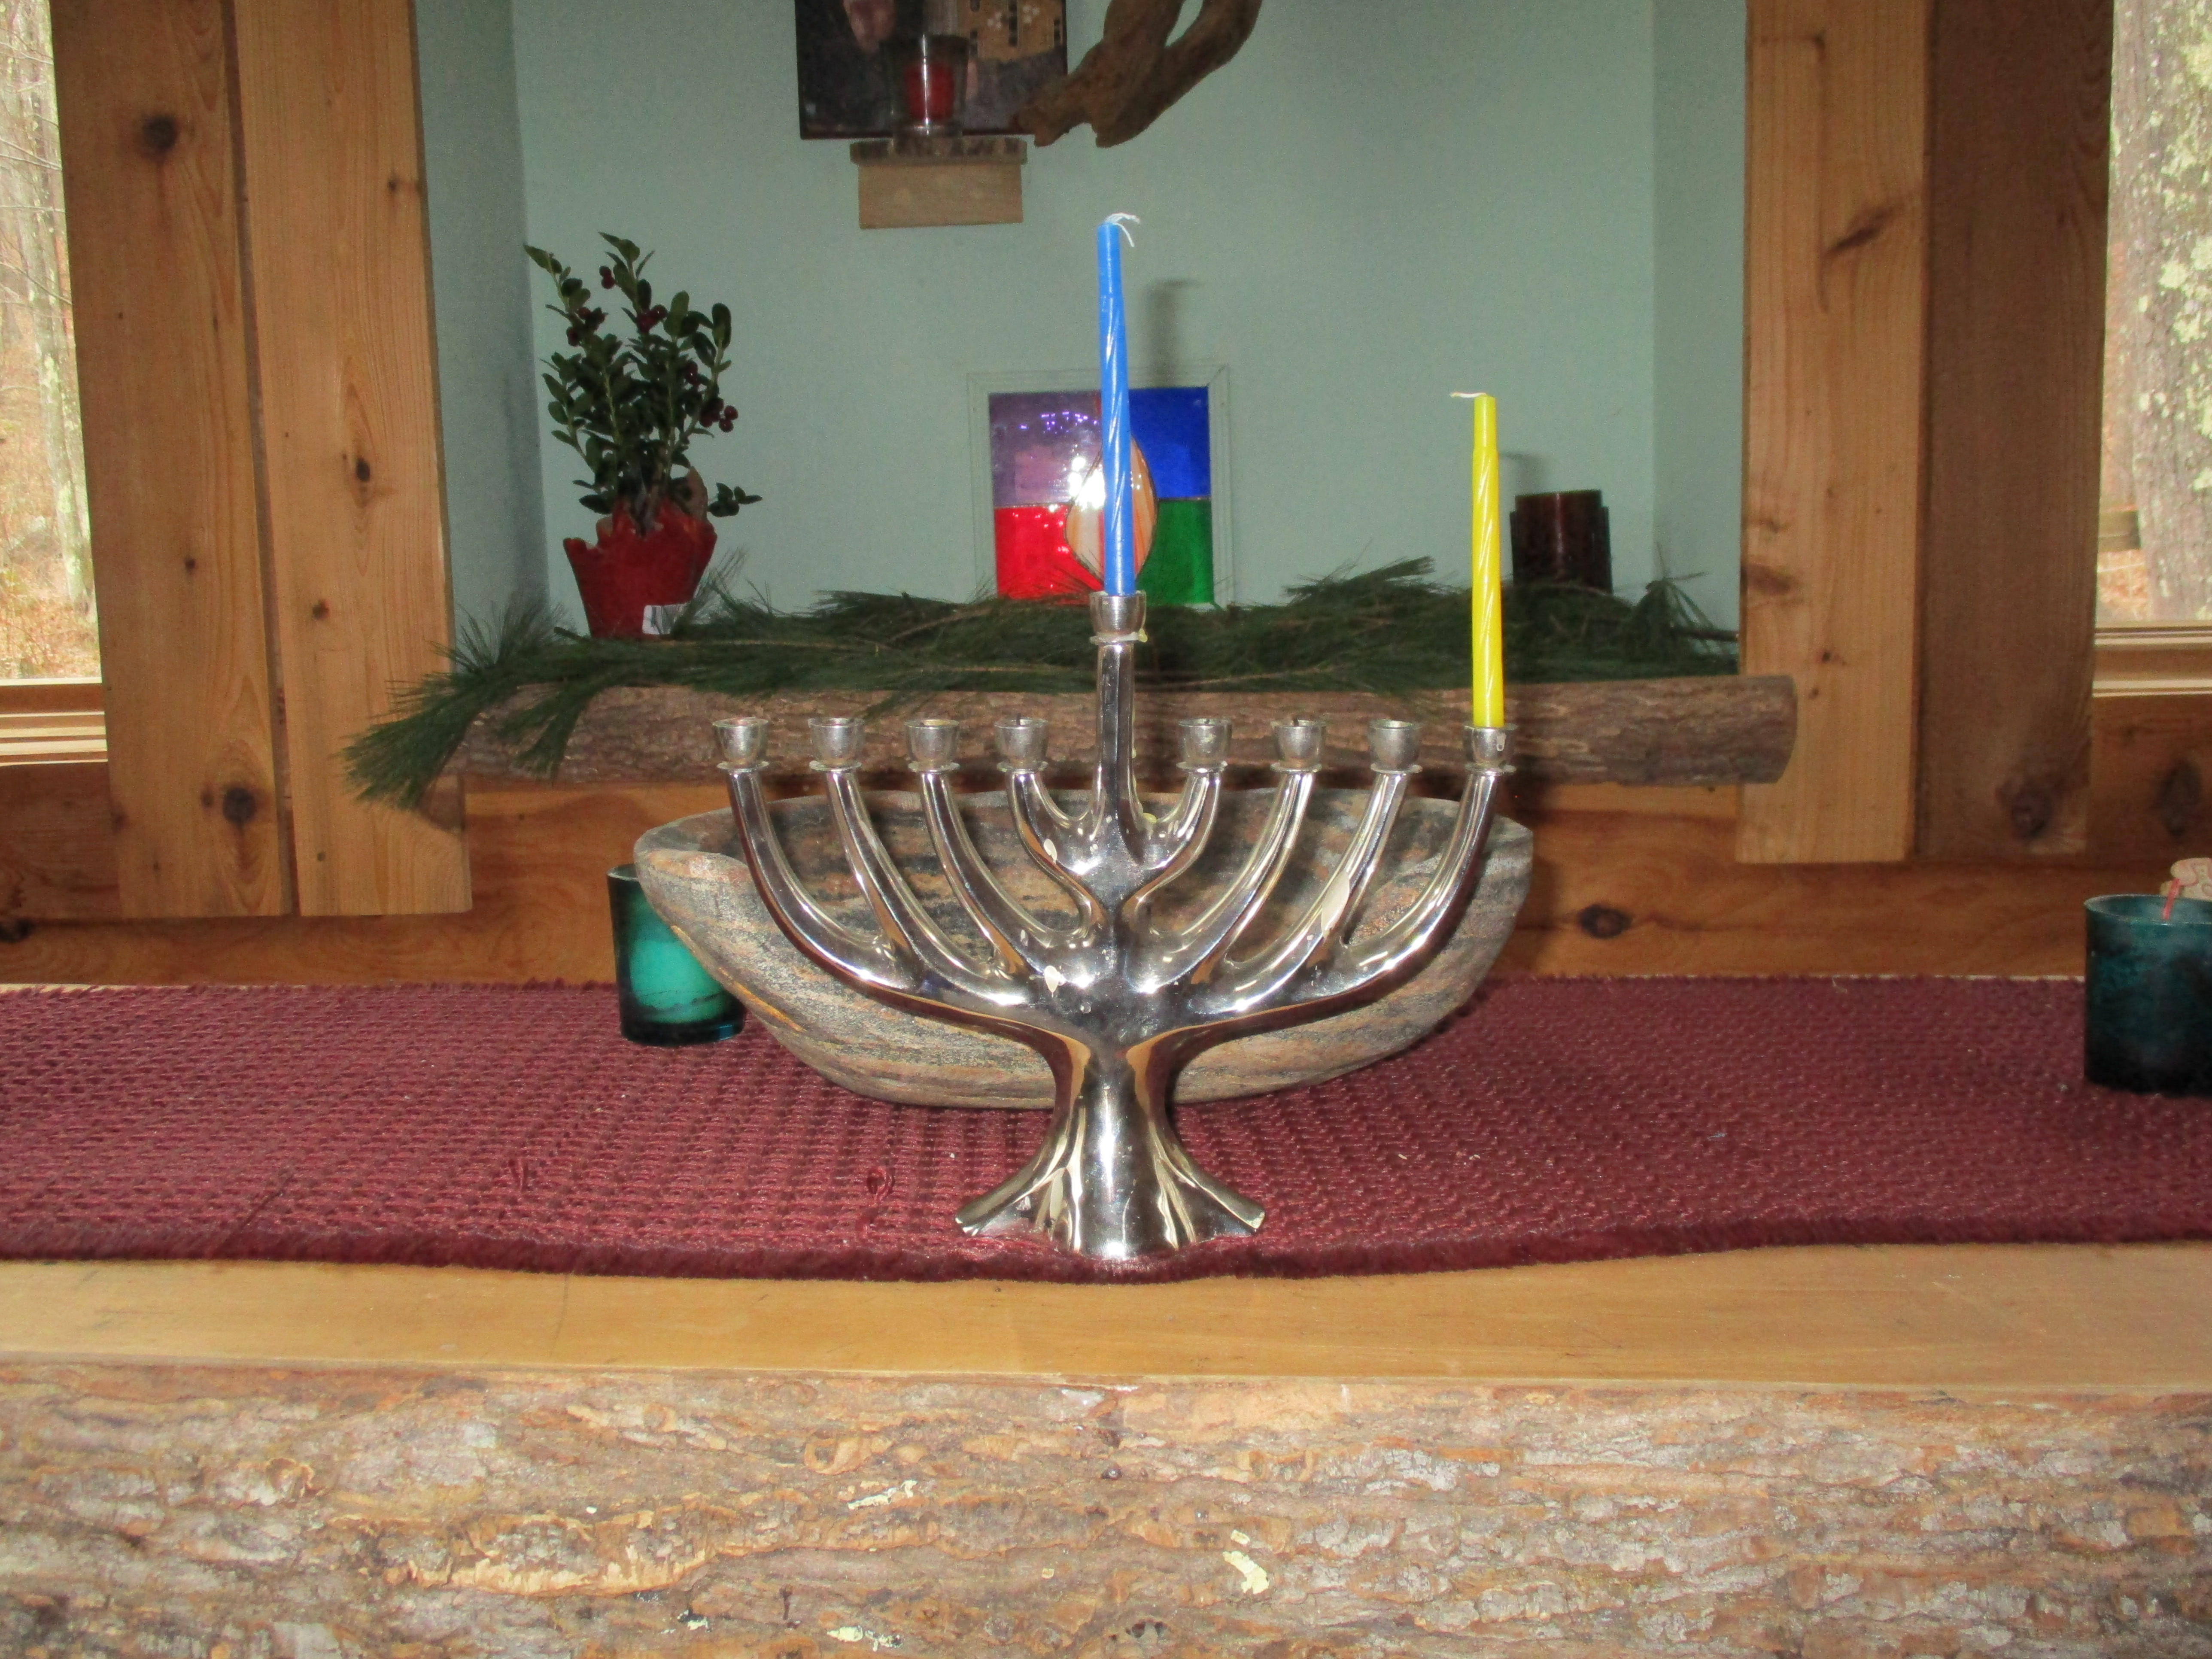 Menorah, lent by Jewish community member, in Agape chapel